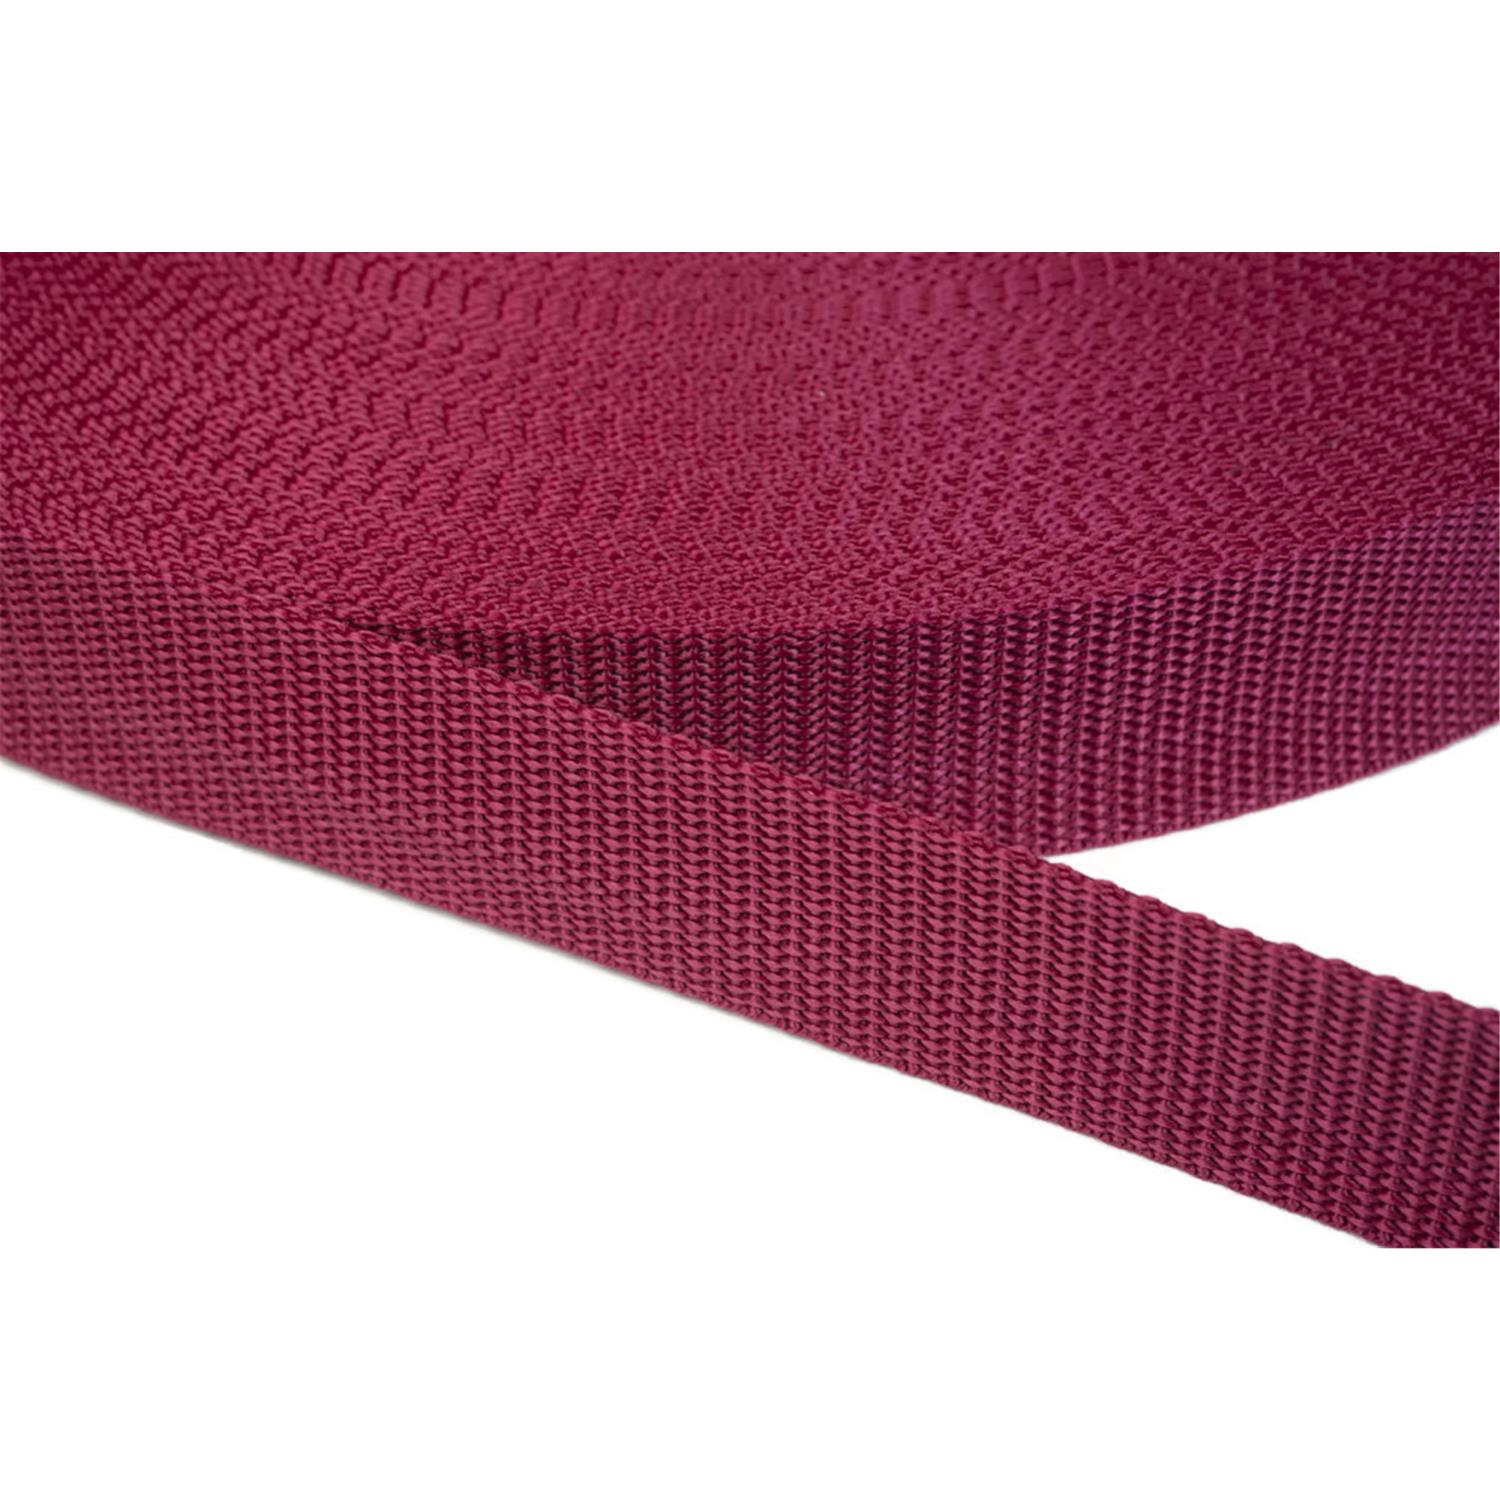 Gurtband 50mm breit aus Polypropylen in 41 Farben 21 - dunkelrot 12 Meter